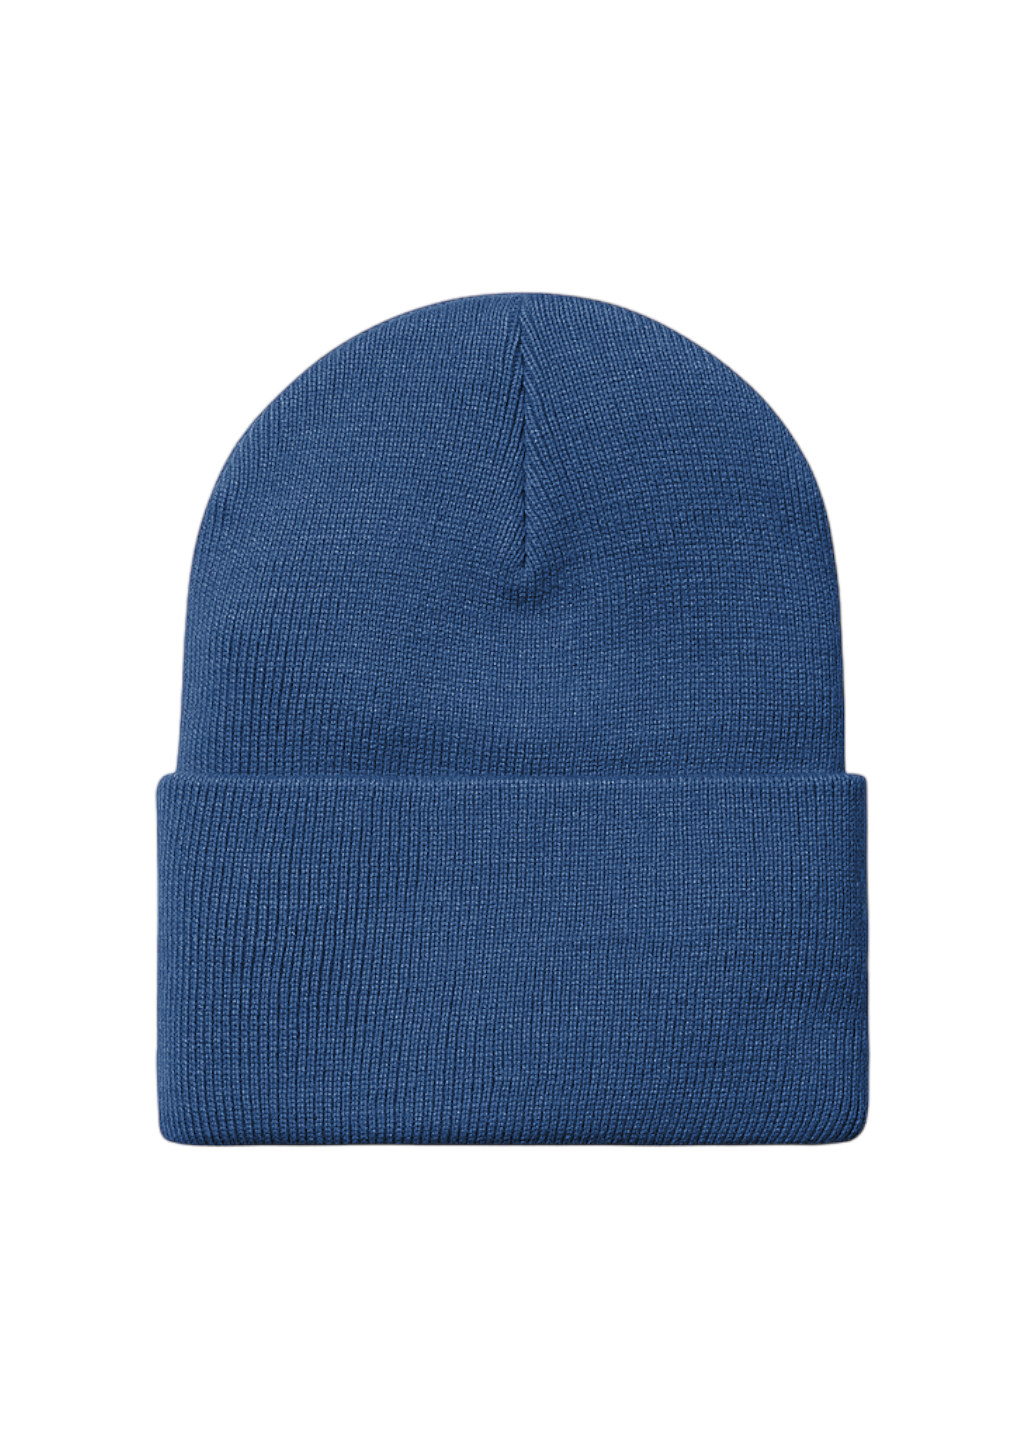 Carhartt Men's Night Blue/Alpine Blue Marl Acrylic Knit Hat at